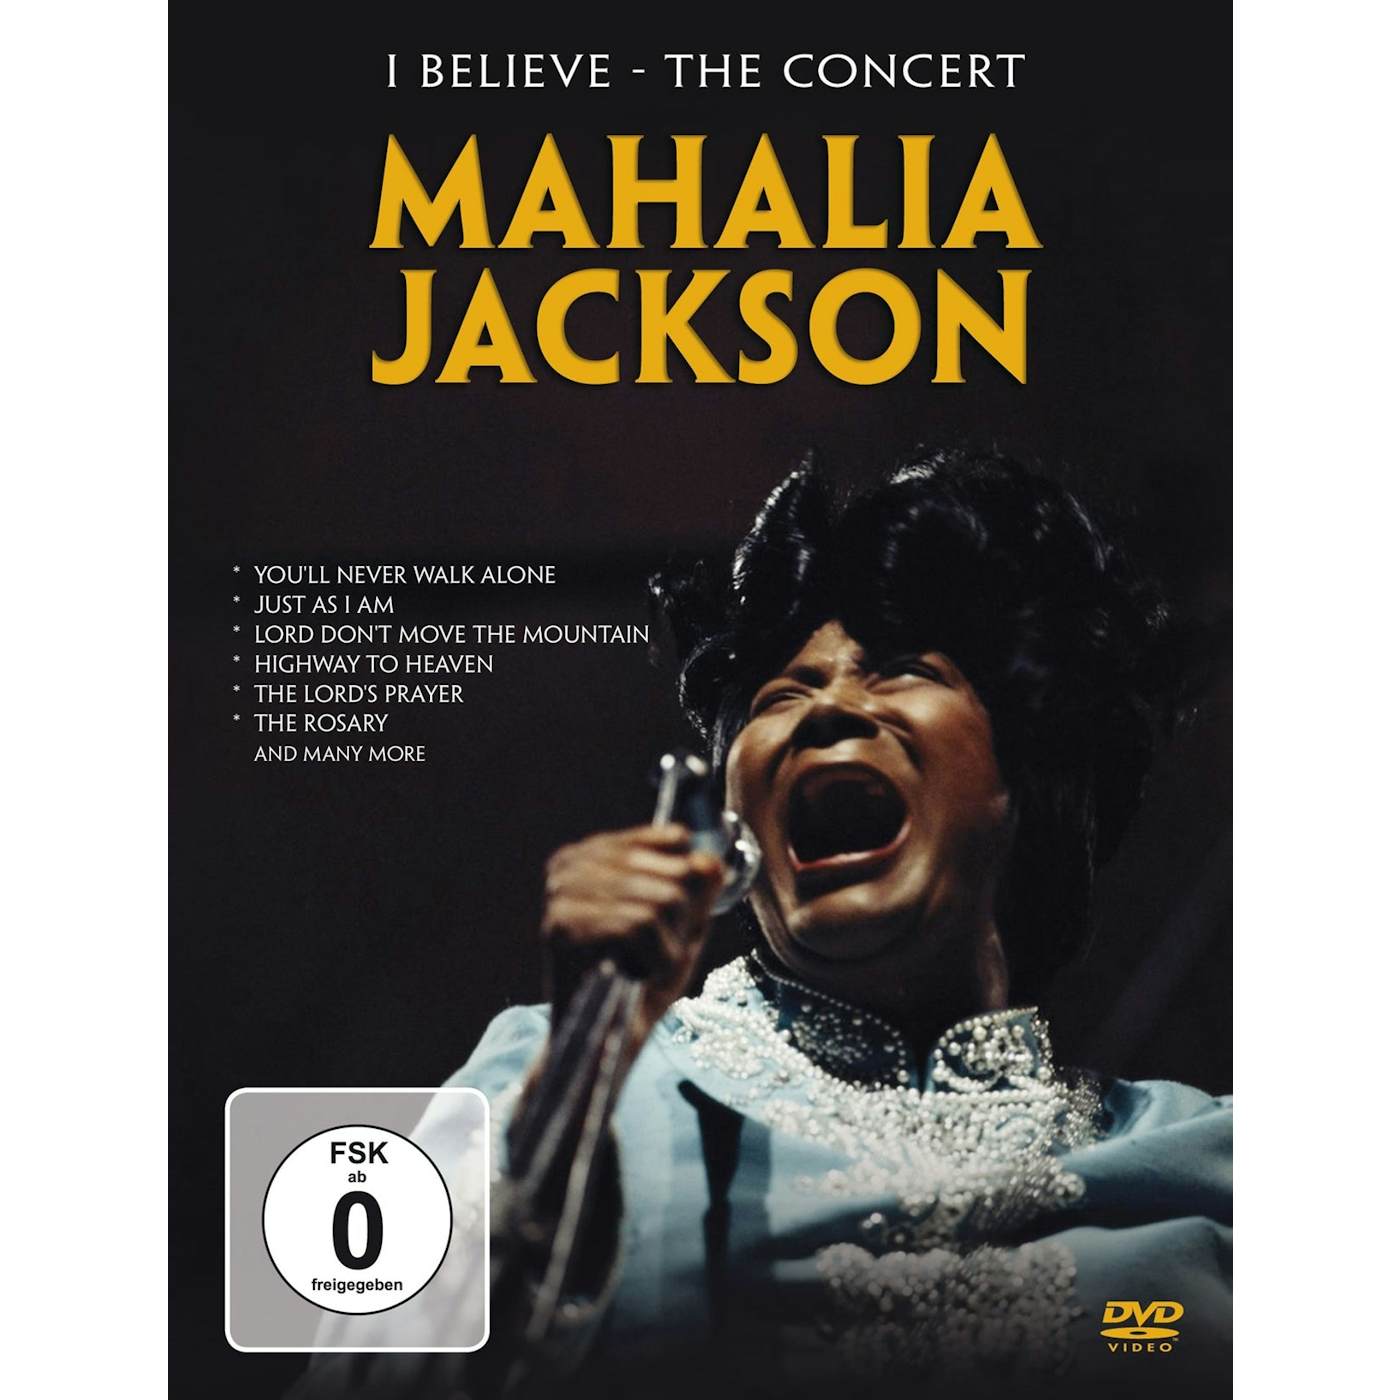 Mahalia Jackson DVD - I Believe - The Concert